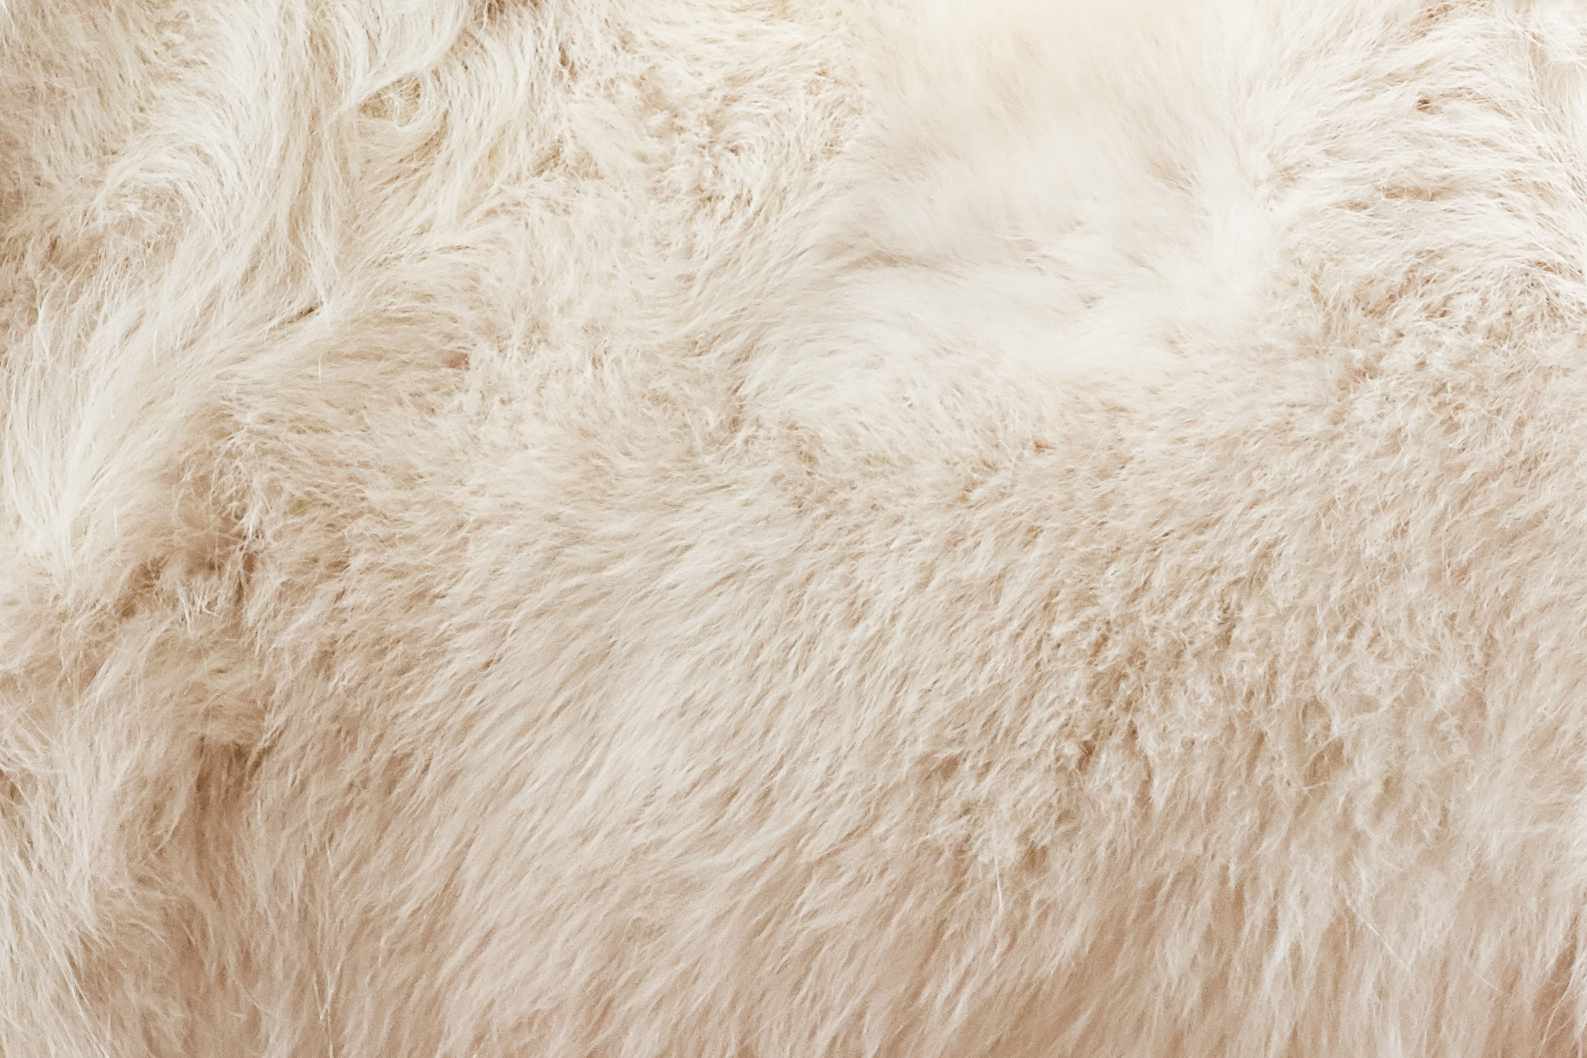 Closeup of a Samoyed's fur